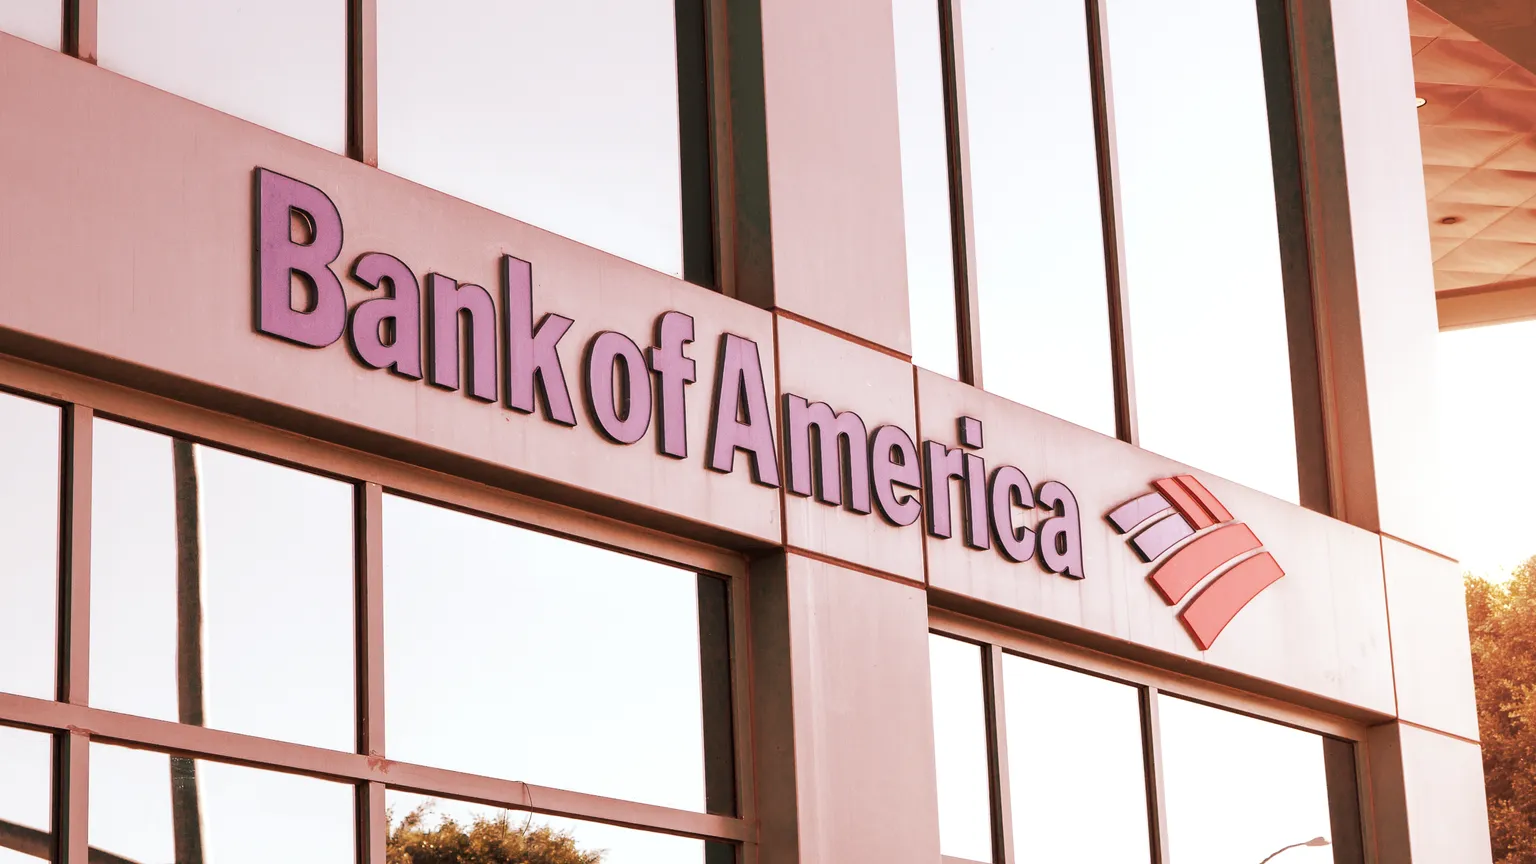 Bank of America. Image: Shutterstock